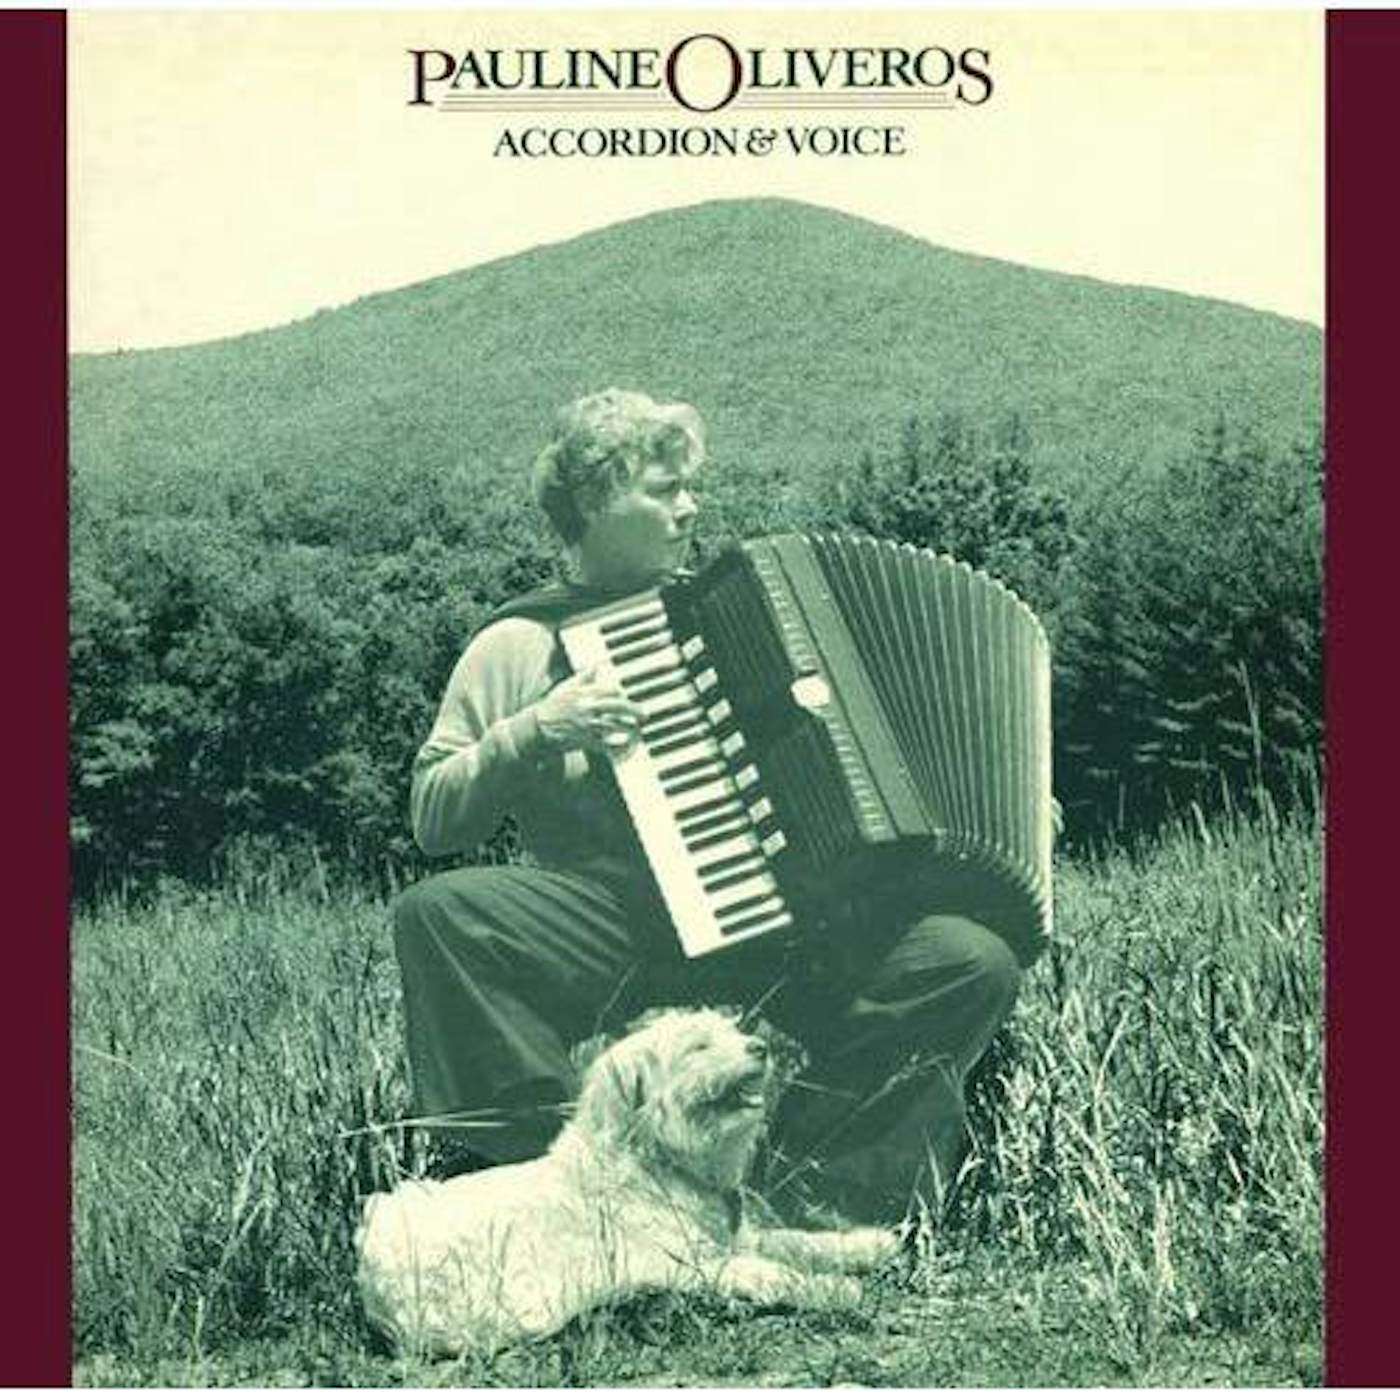 Pauline Oliveros Accordion & Voice Vinyl Record